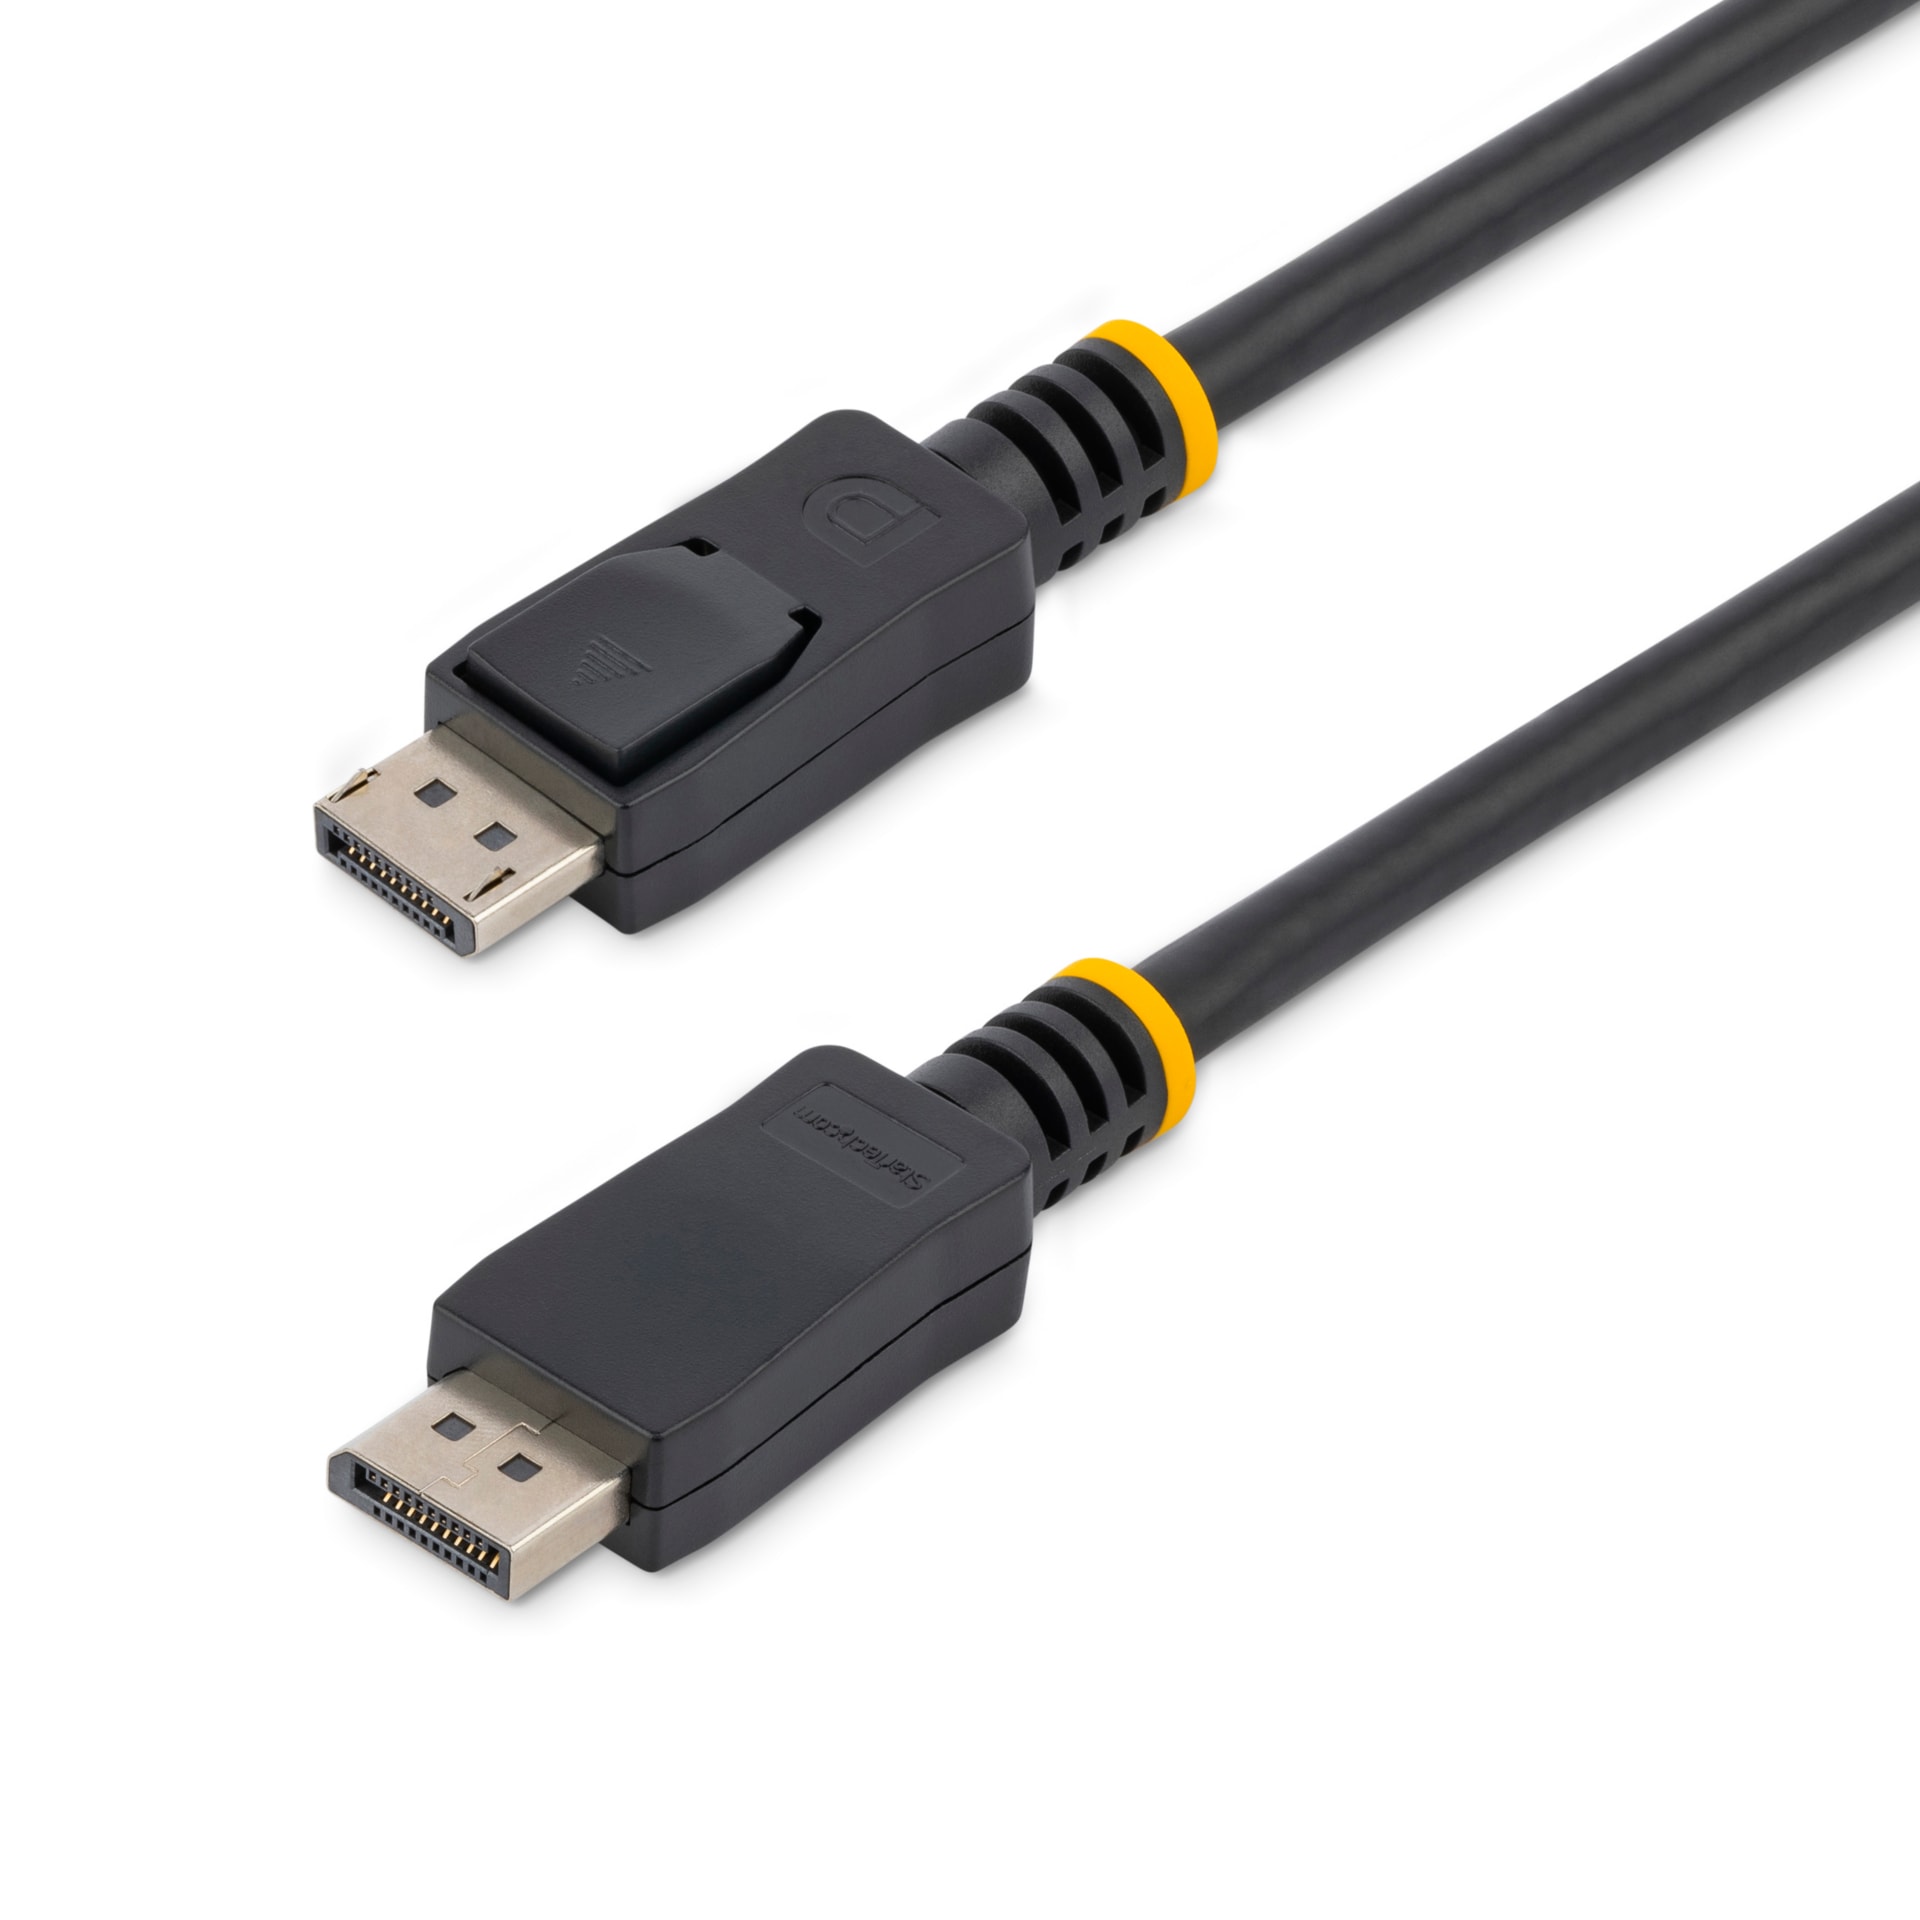 Startech .com 10ft (3m) Mini DisplayPort to DisplayPort 1.2 Cable, 4K x 2K  mDP to DisplayPort Adapter Cable, Mini DP to DP Cable10ft/3m Min